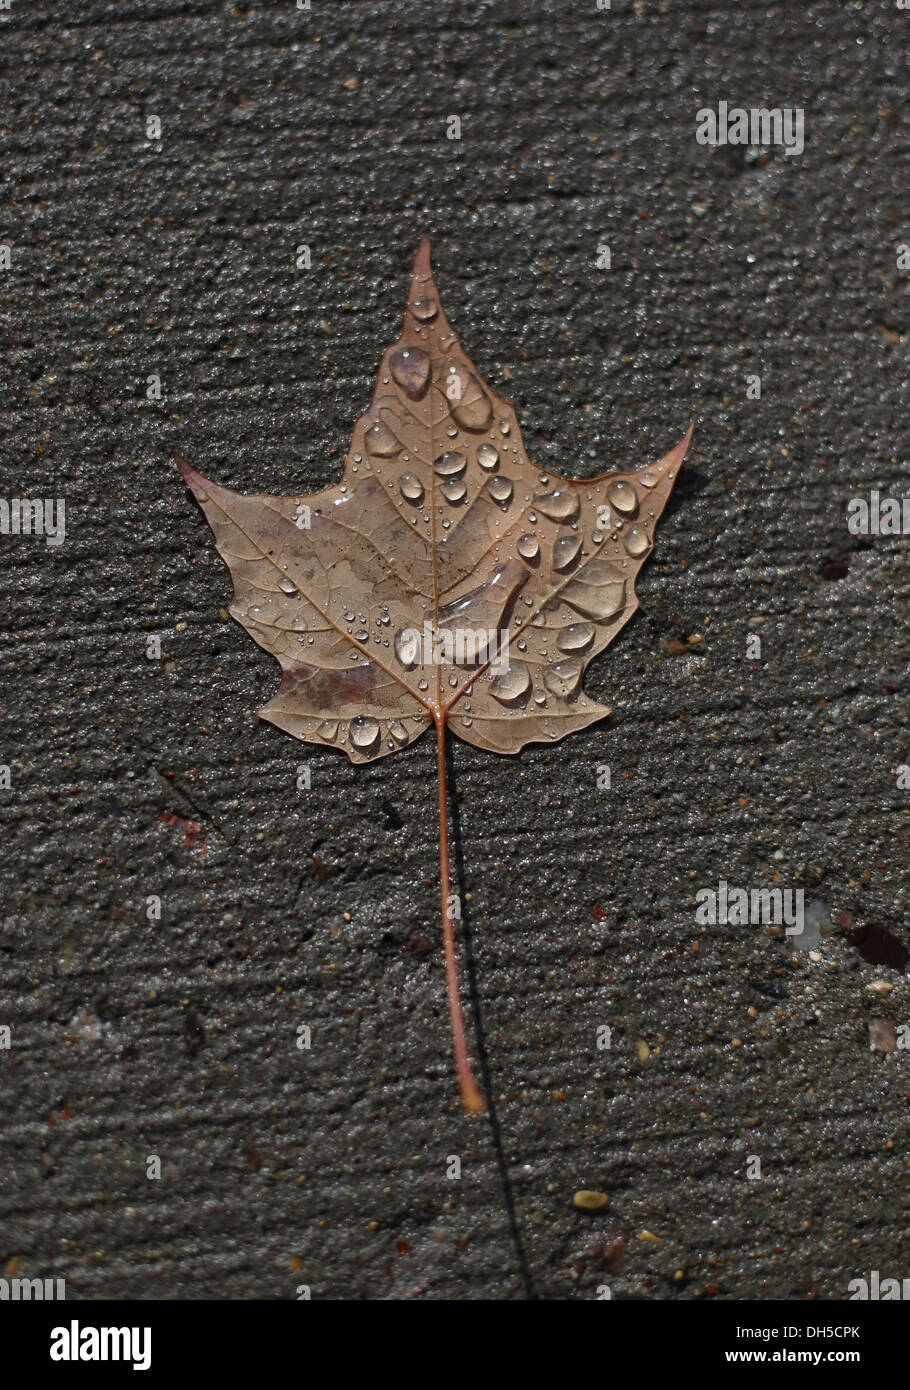 An autumn leaf on a sidewalk, covered with rain drops. Stock Photo